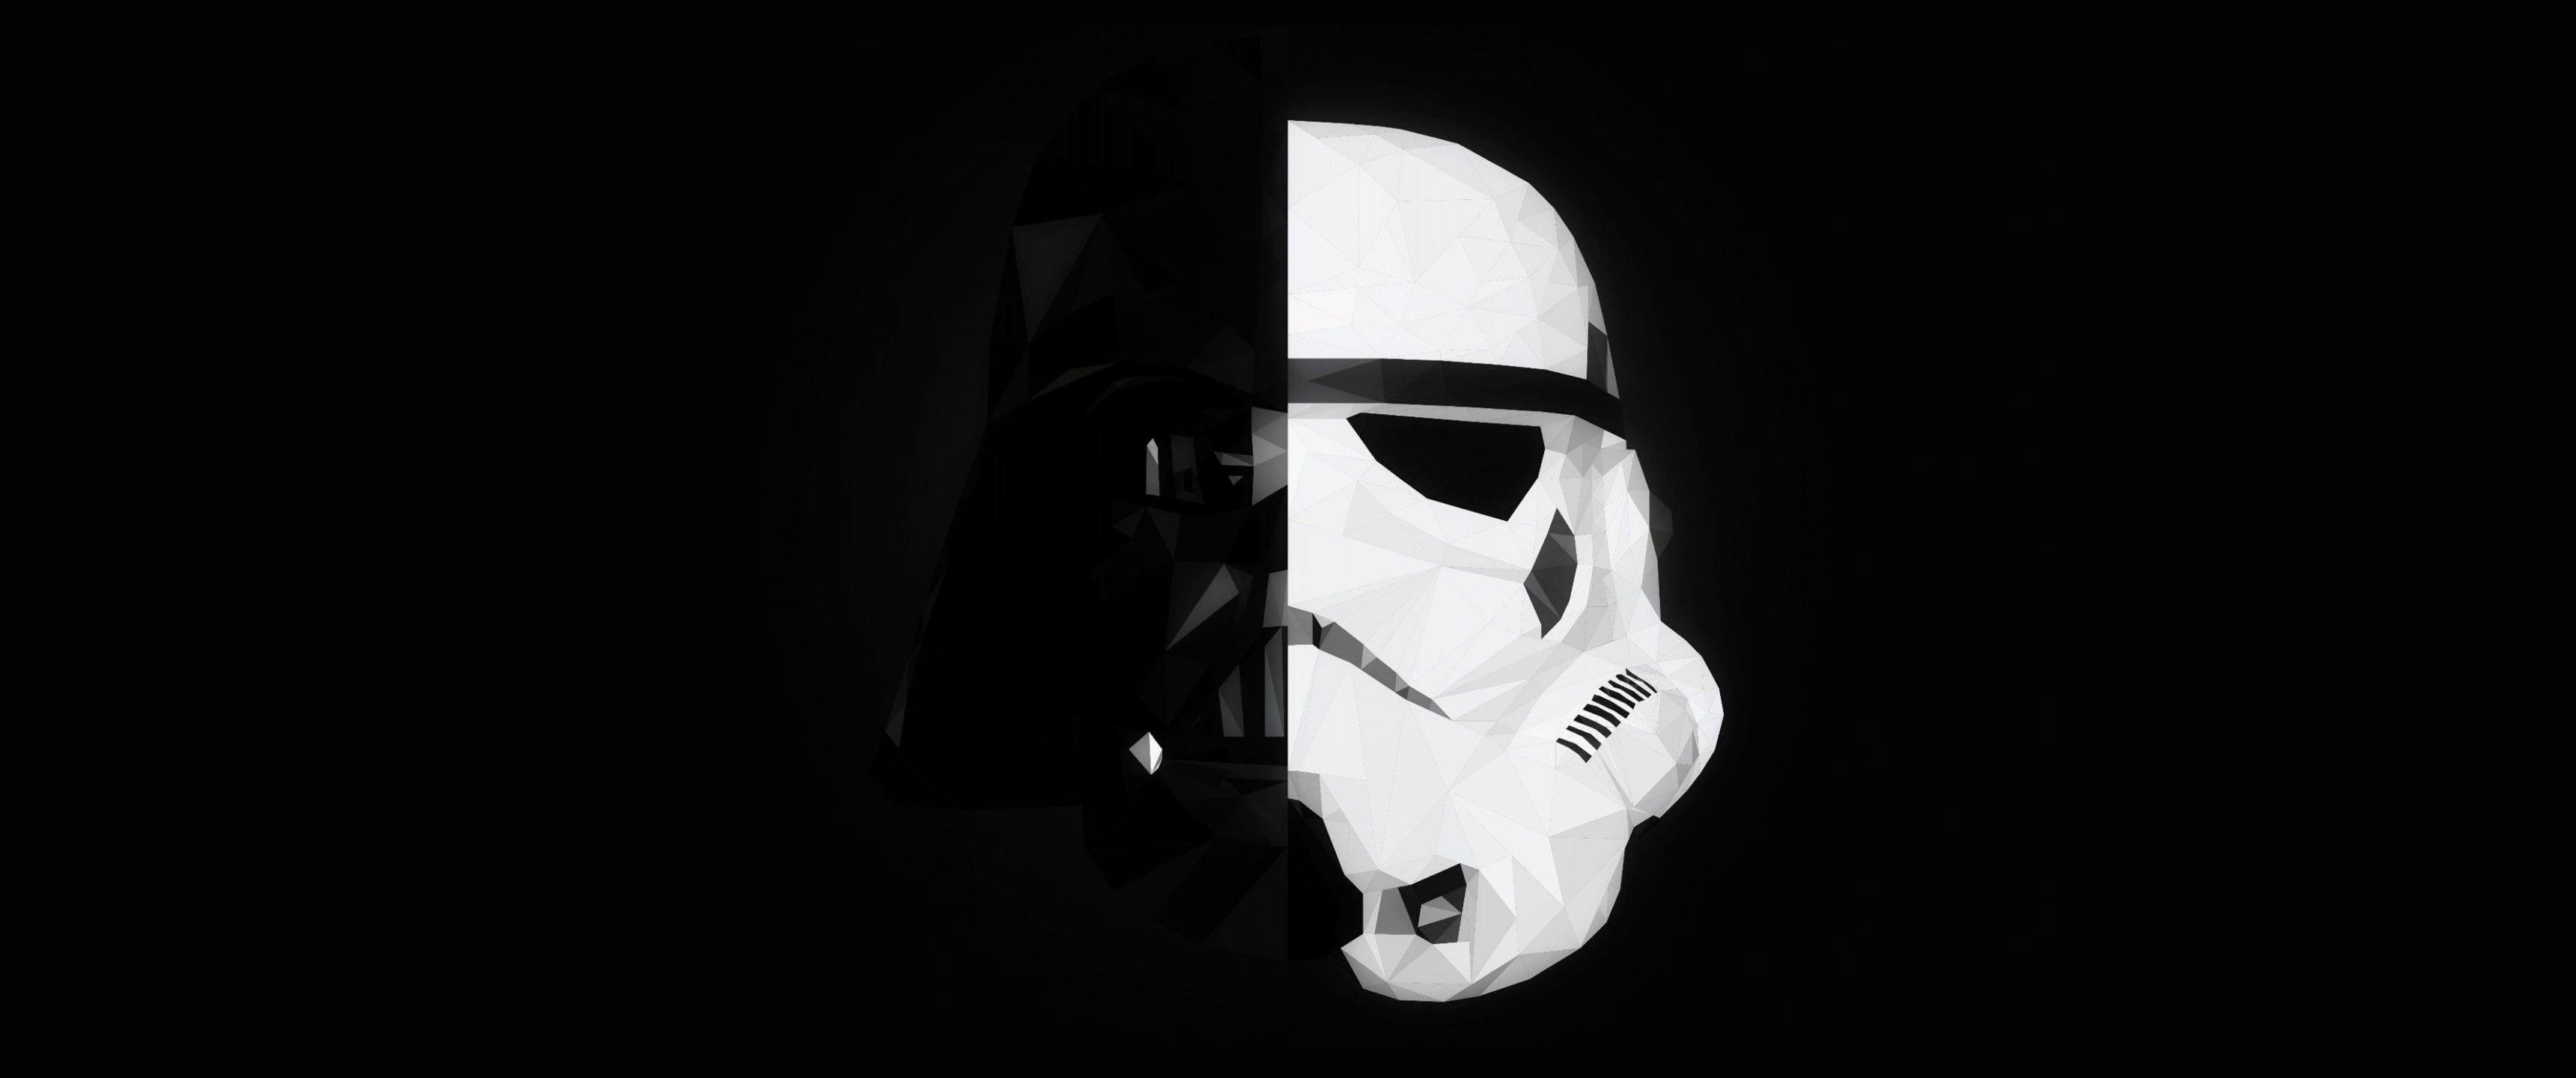 Death Trooper Star Wars Dual Screen Wallpapers Top Free